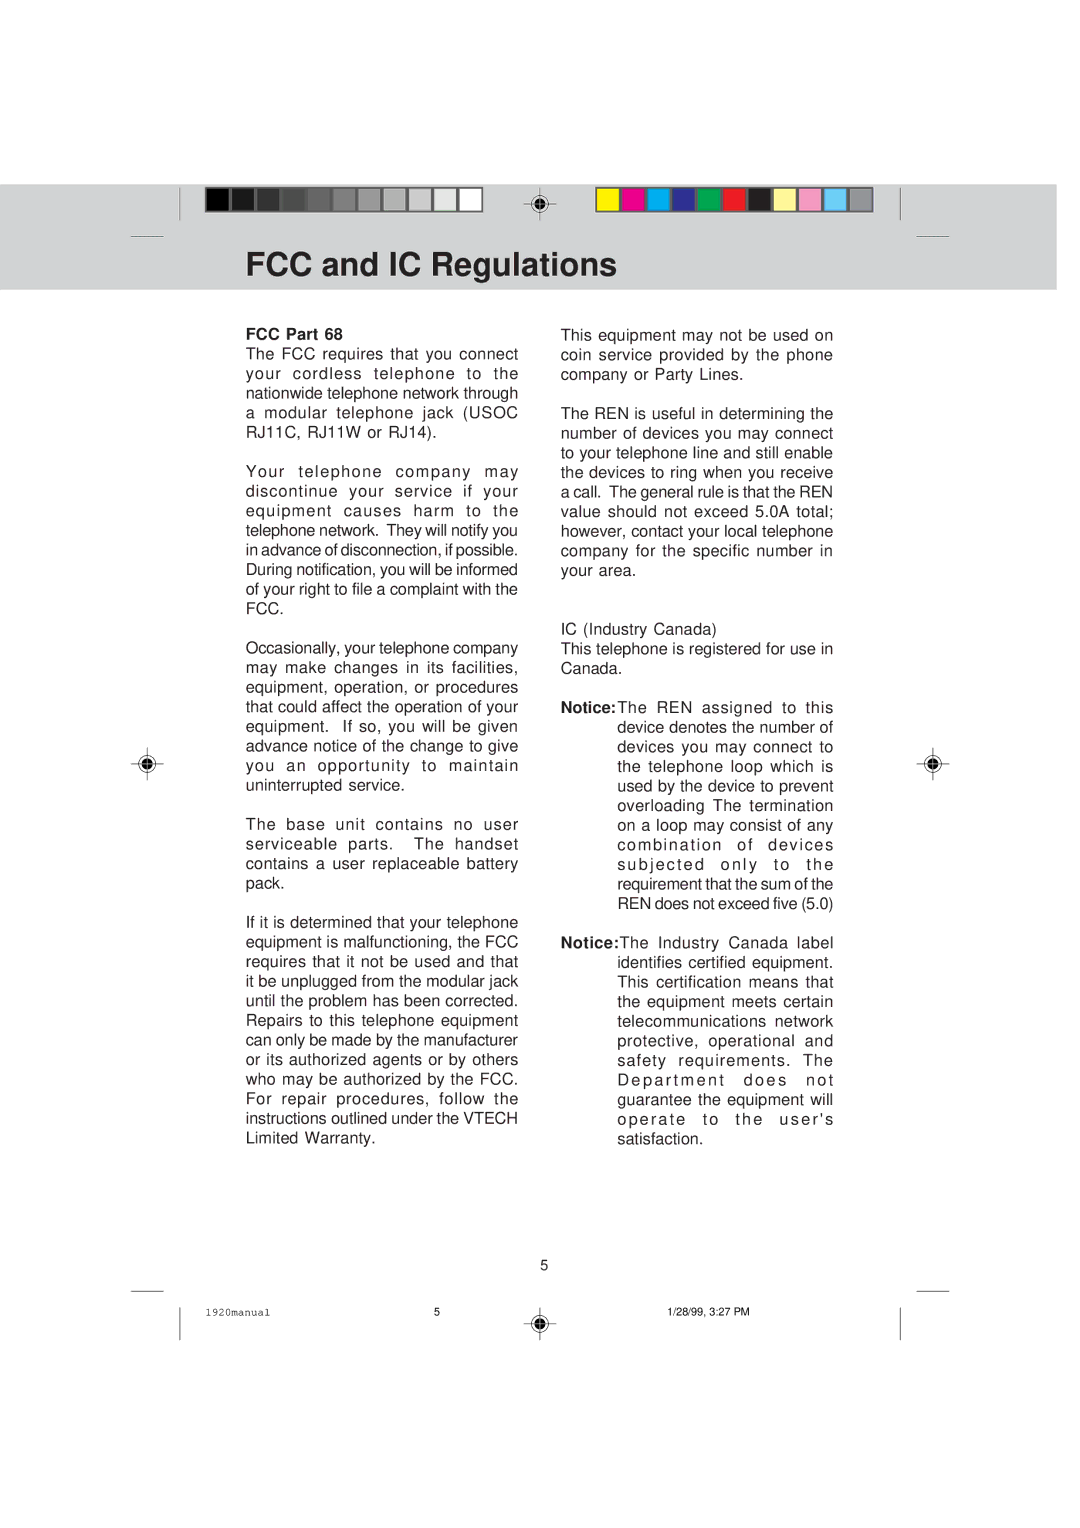 VTech VT 1920C manual FCC and IC Regulations 